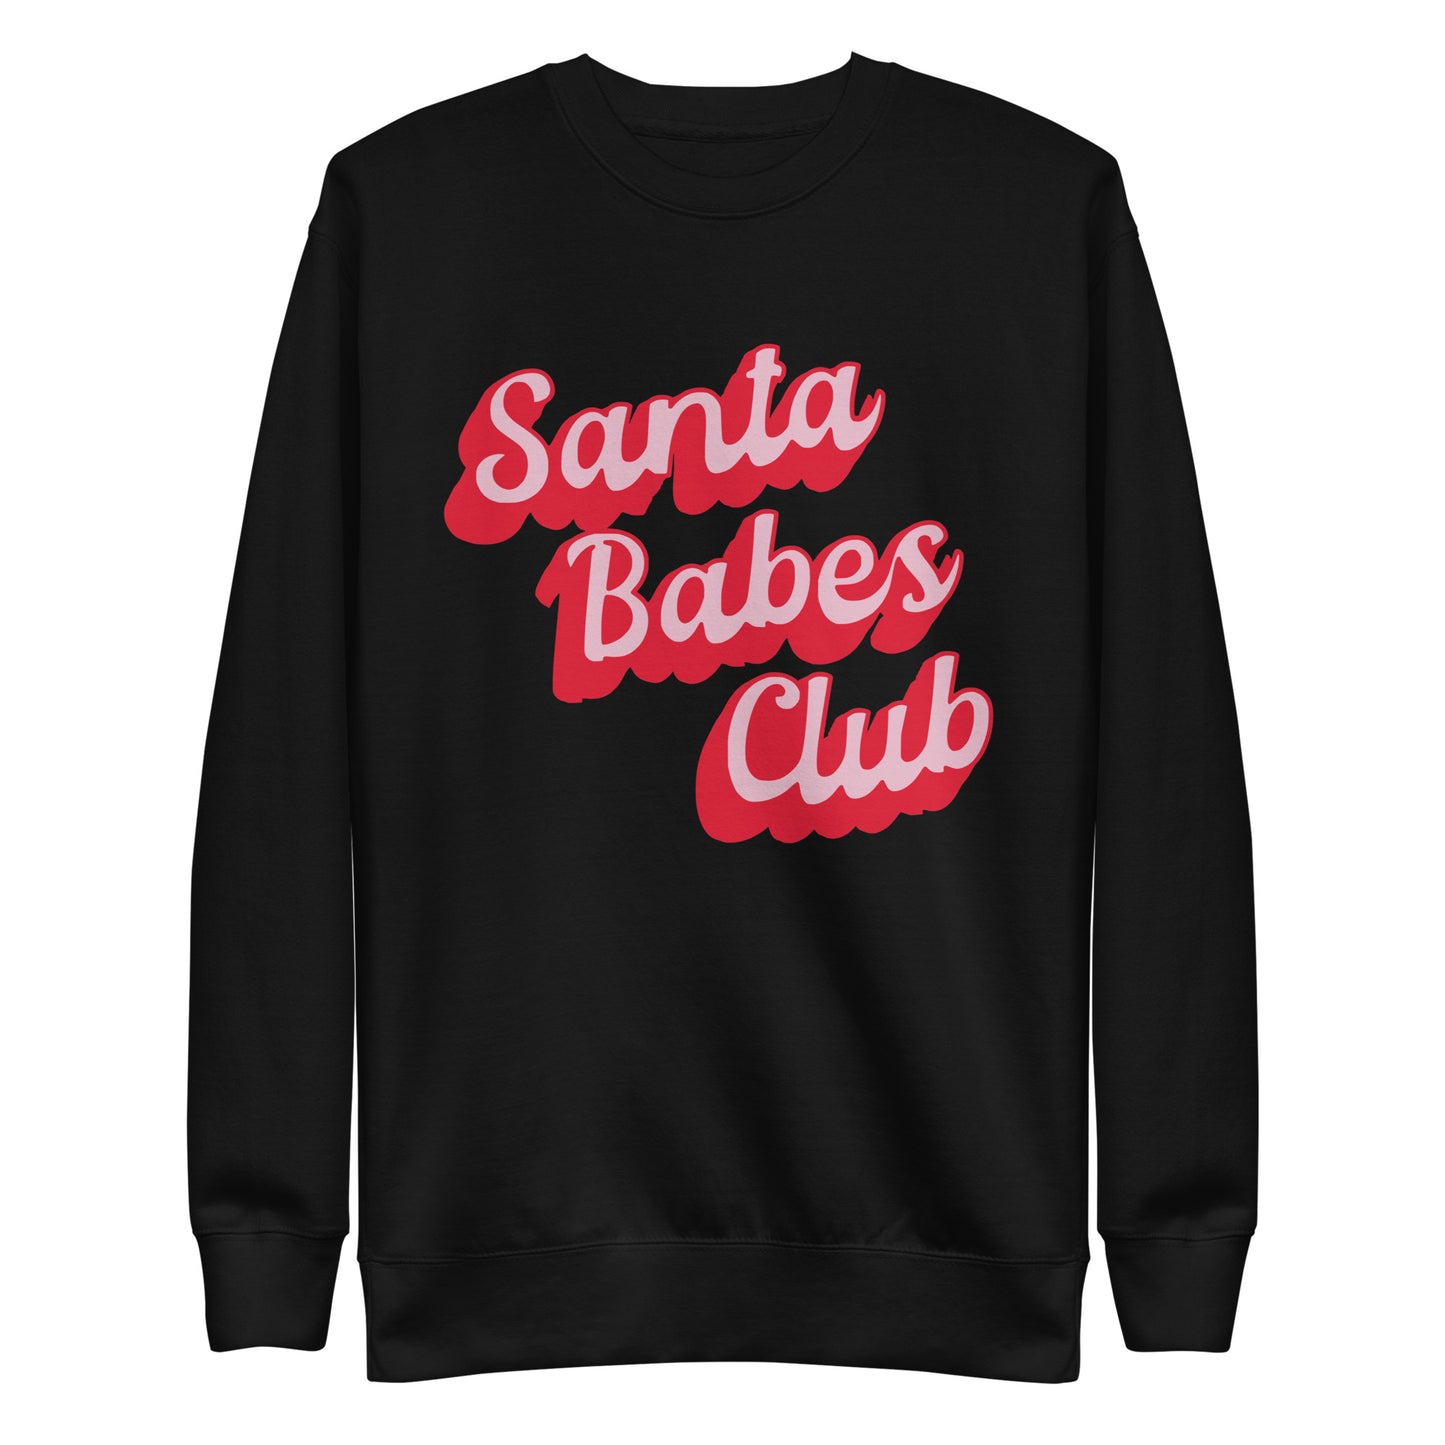 Santa Babes Club Sweatshirt in Black